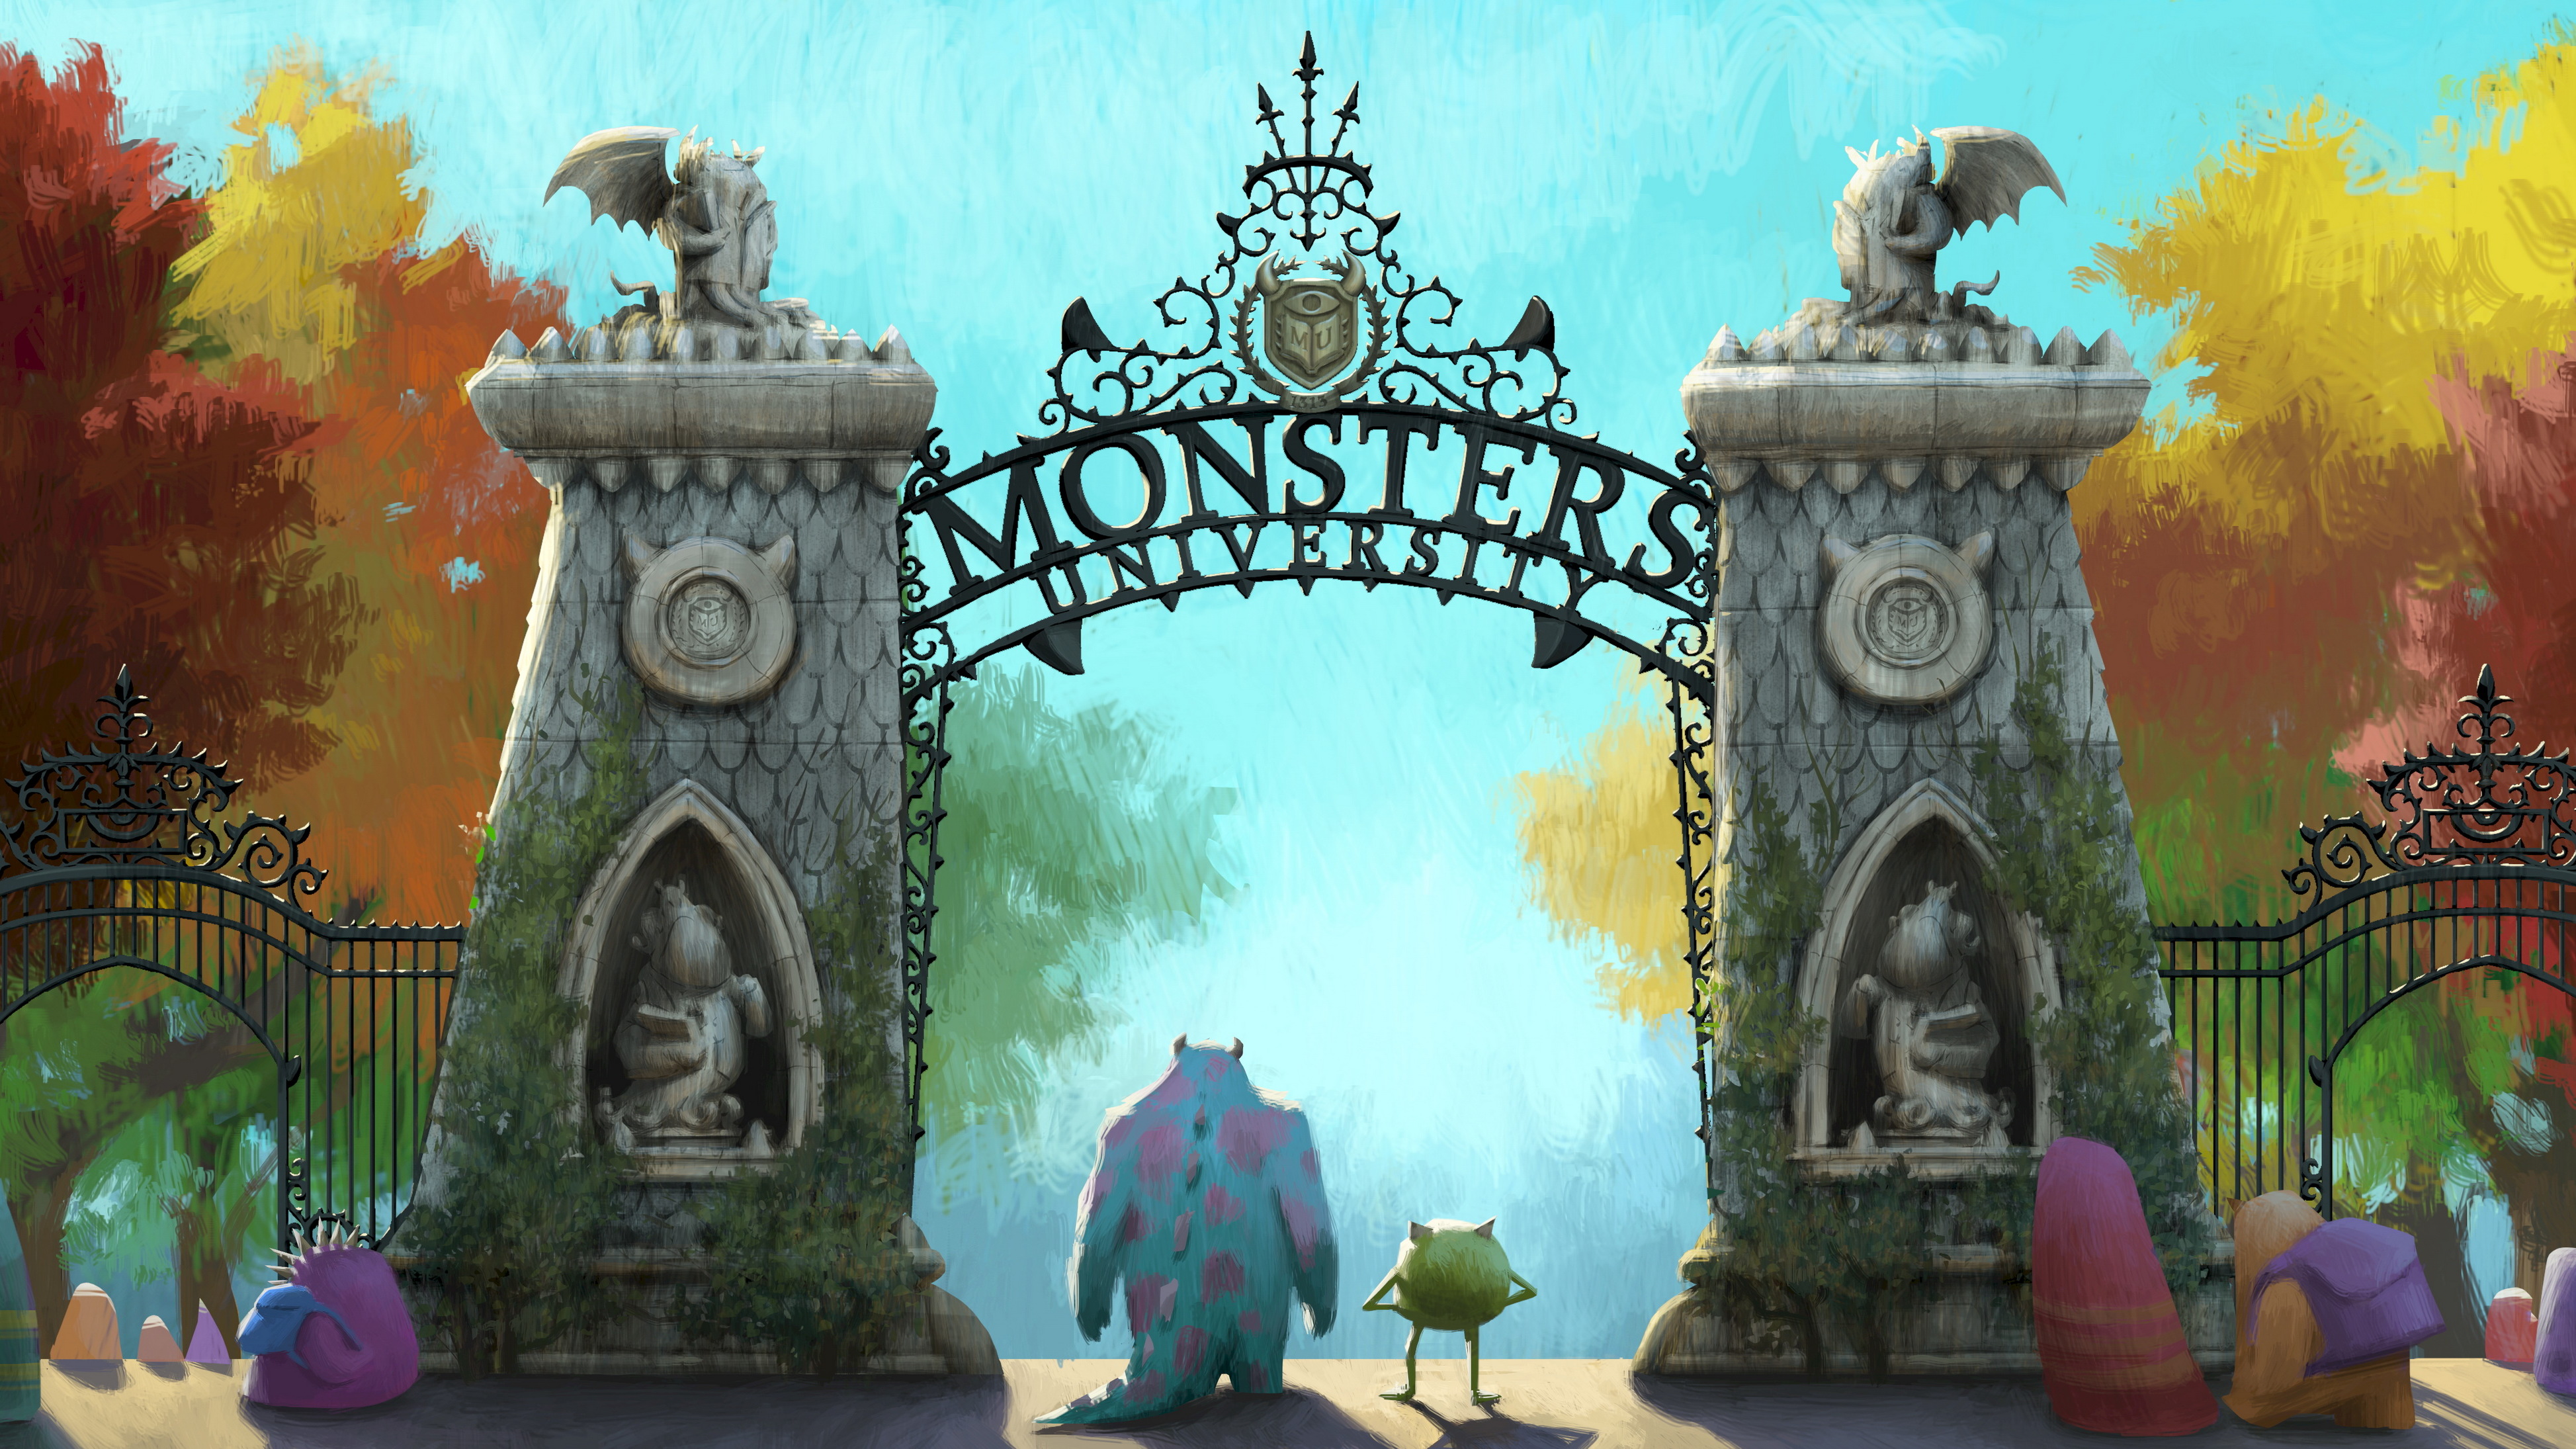 Concept art Pixars Monsters University